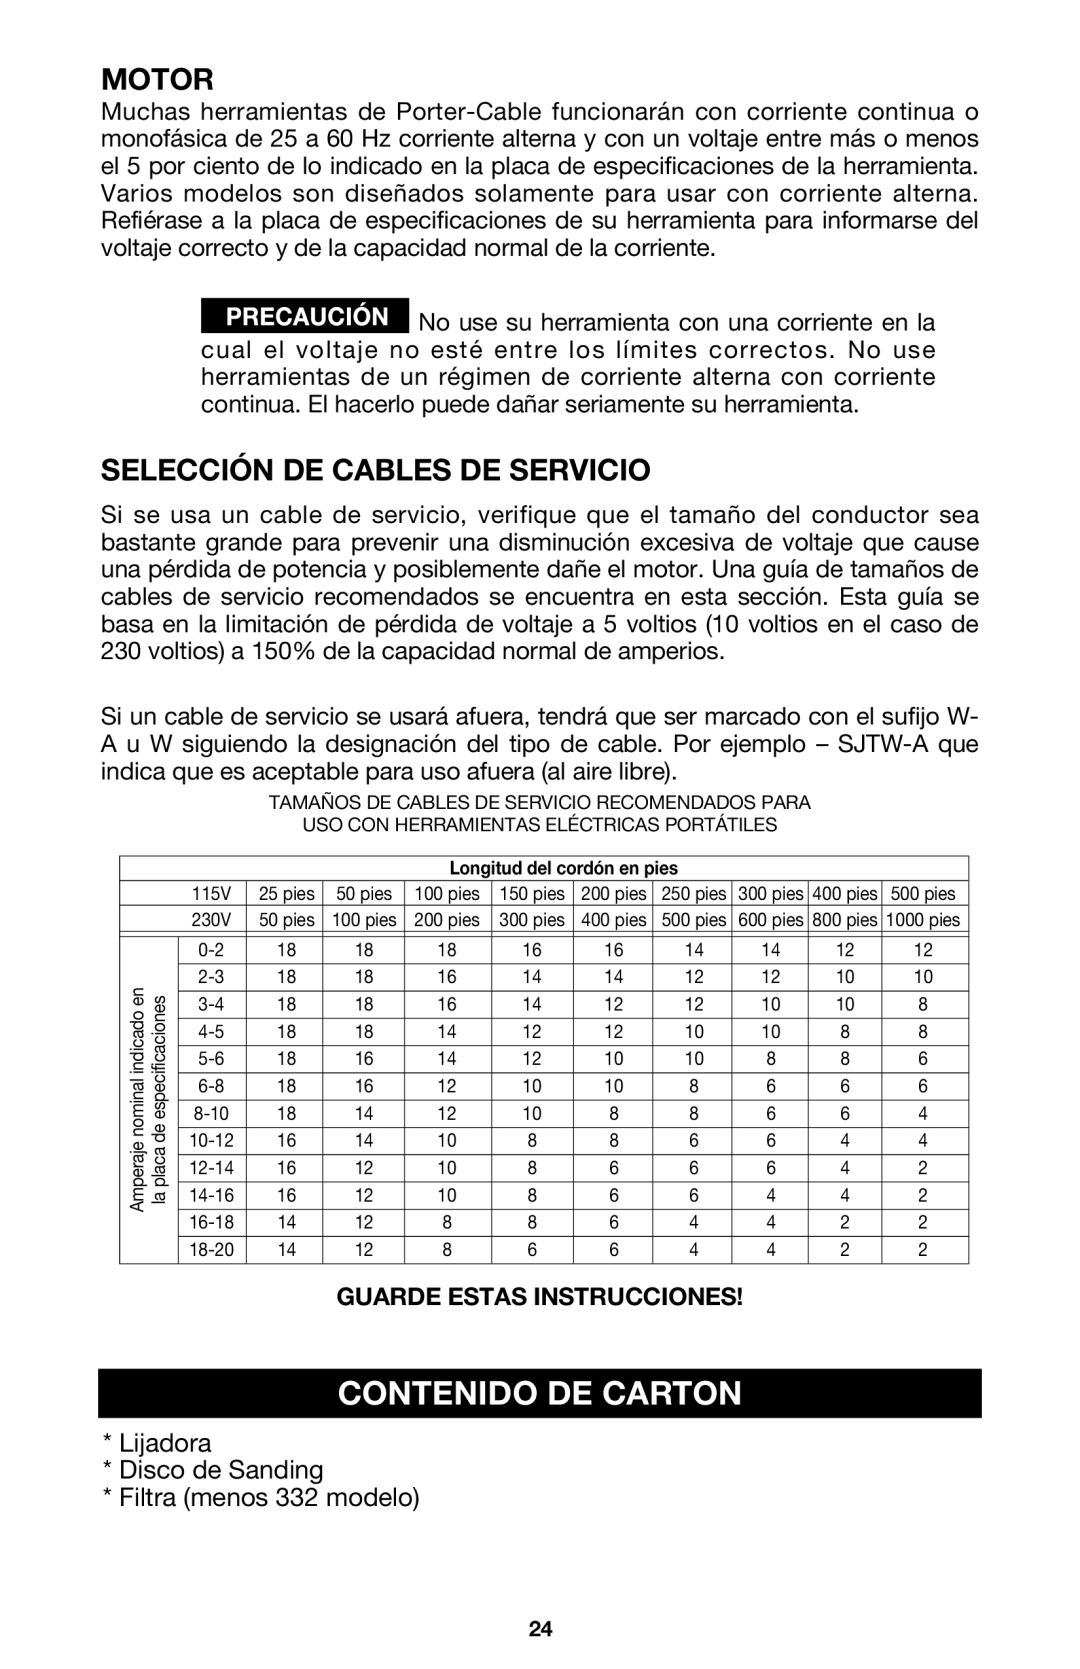 Porter-Cable 333VS instruction manual Contenido De Carton, Selección De Cables De Servicio, Motor 